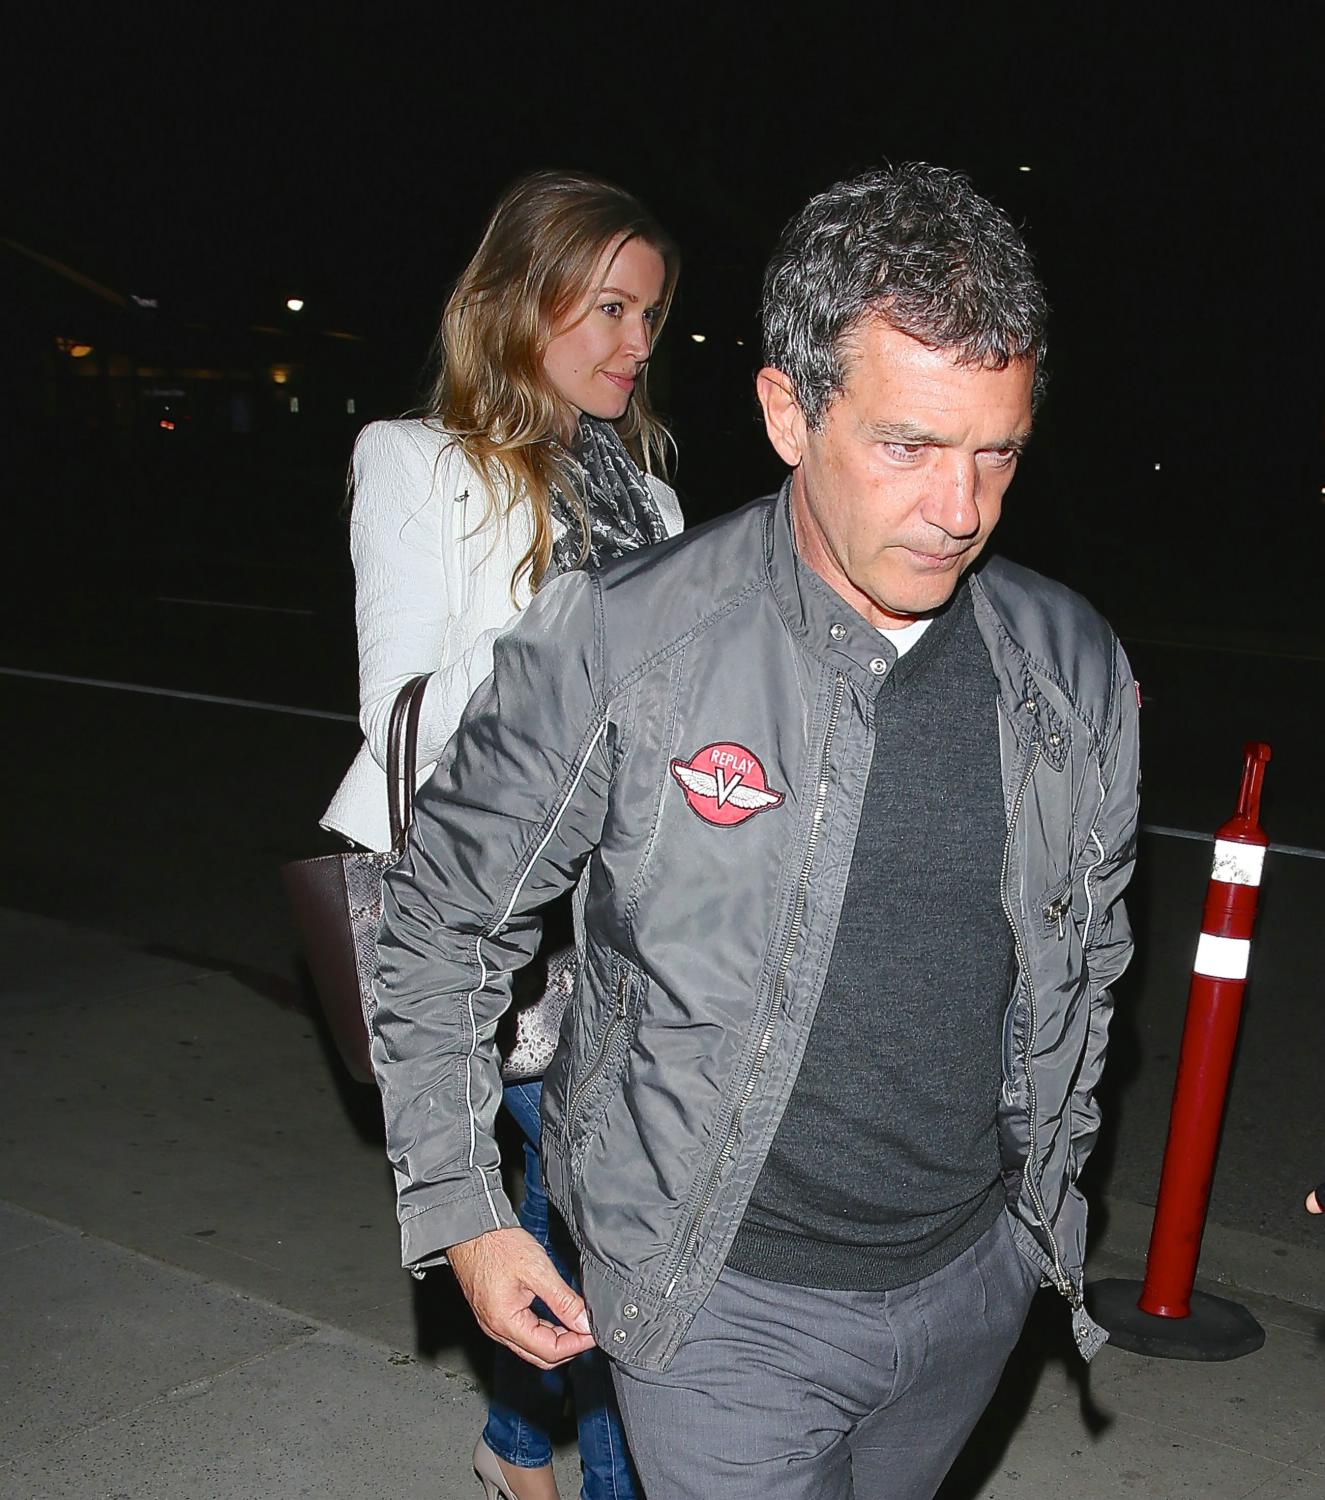 Antonio Banderas Out With Girlfriend Nicole Kimpel – Celeb Donut